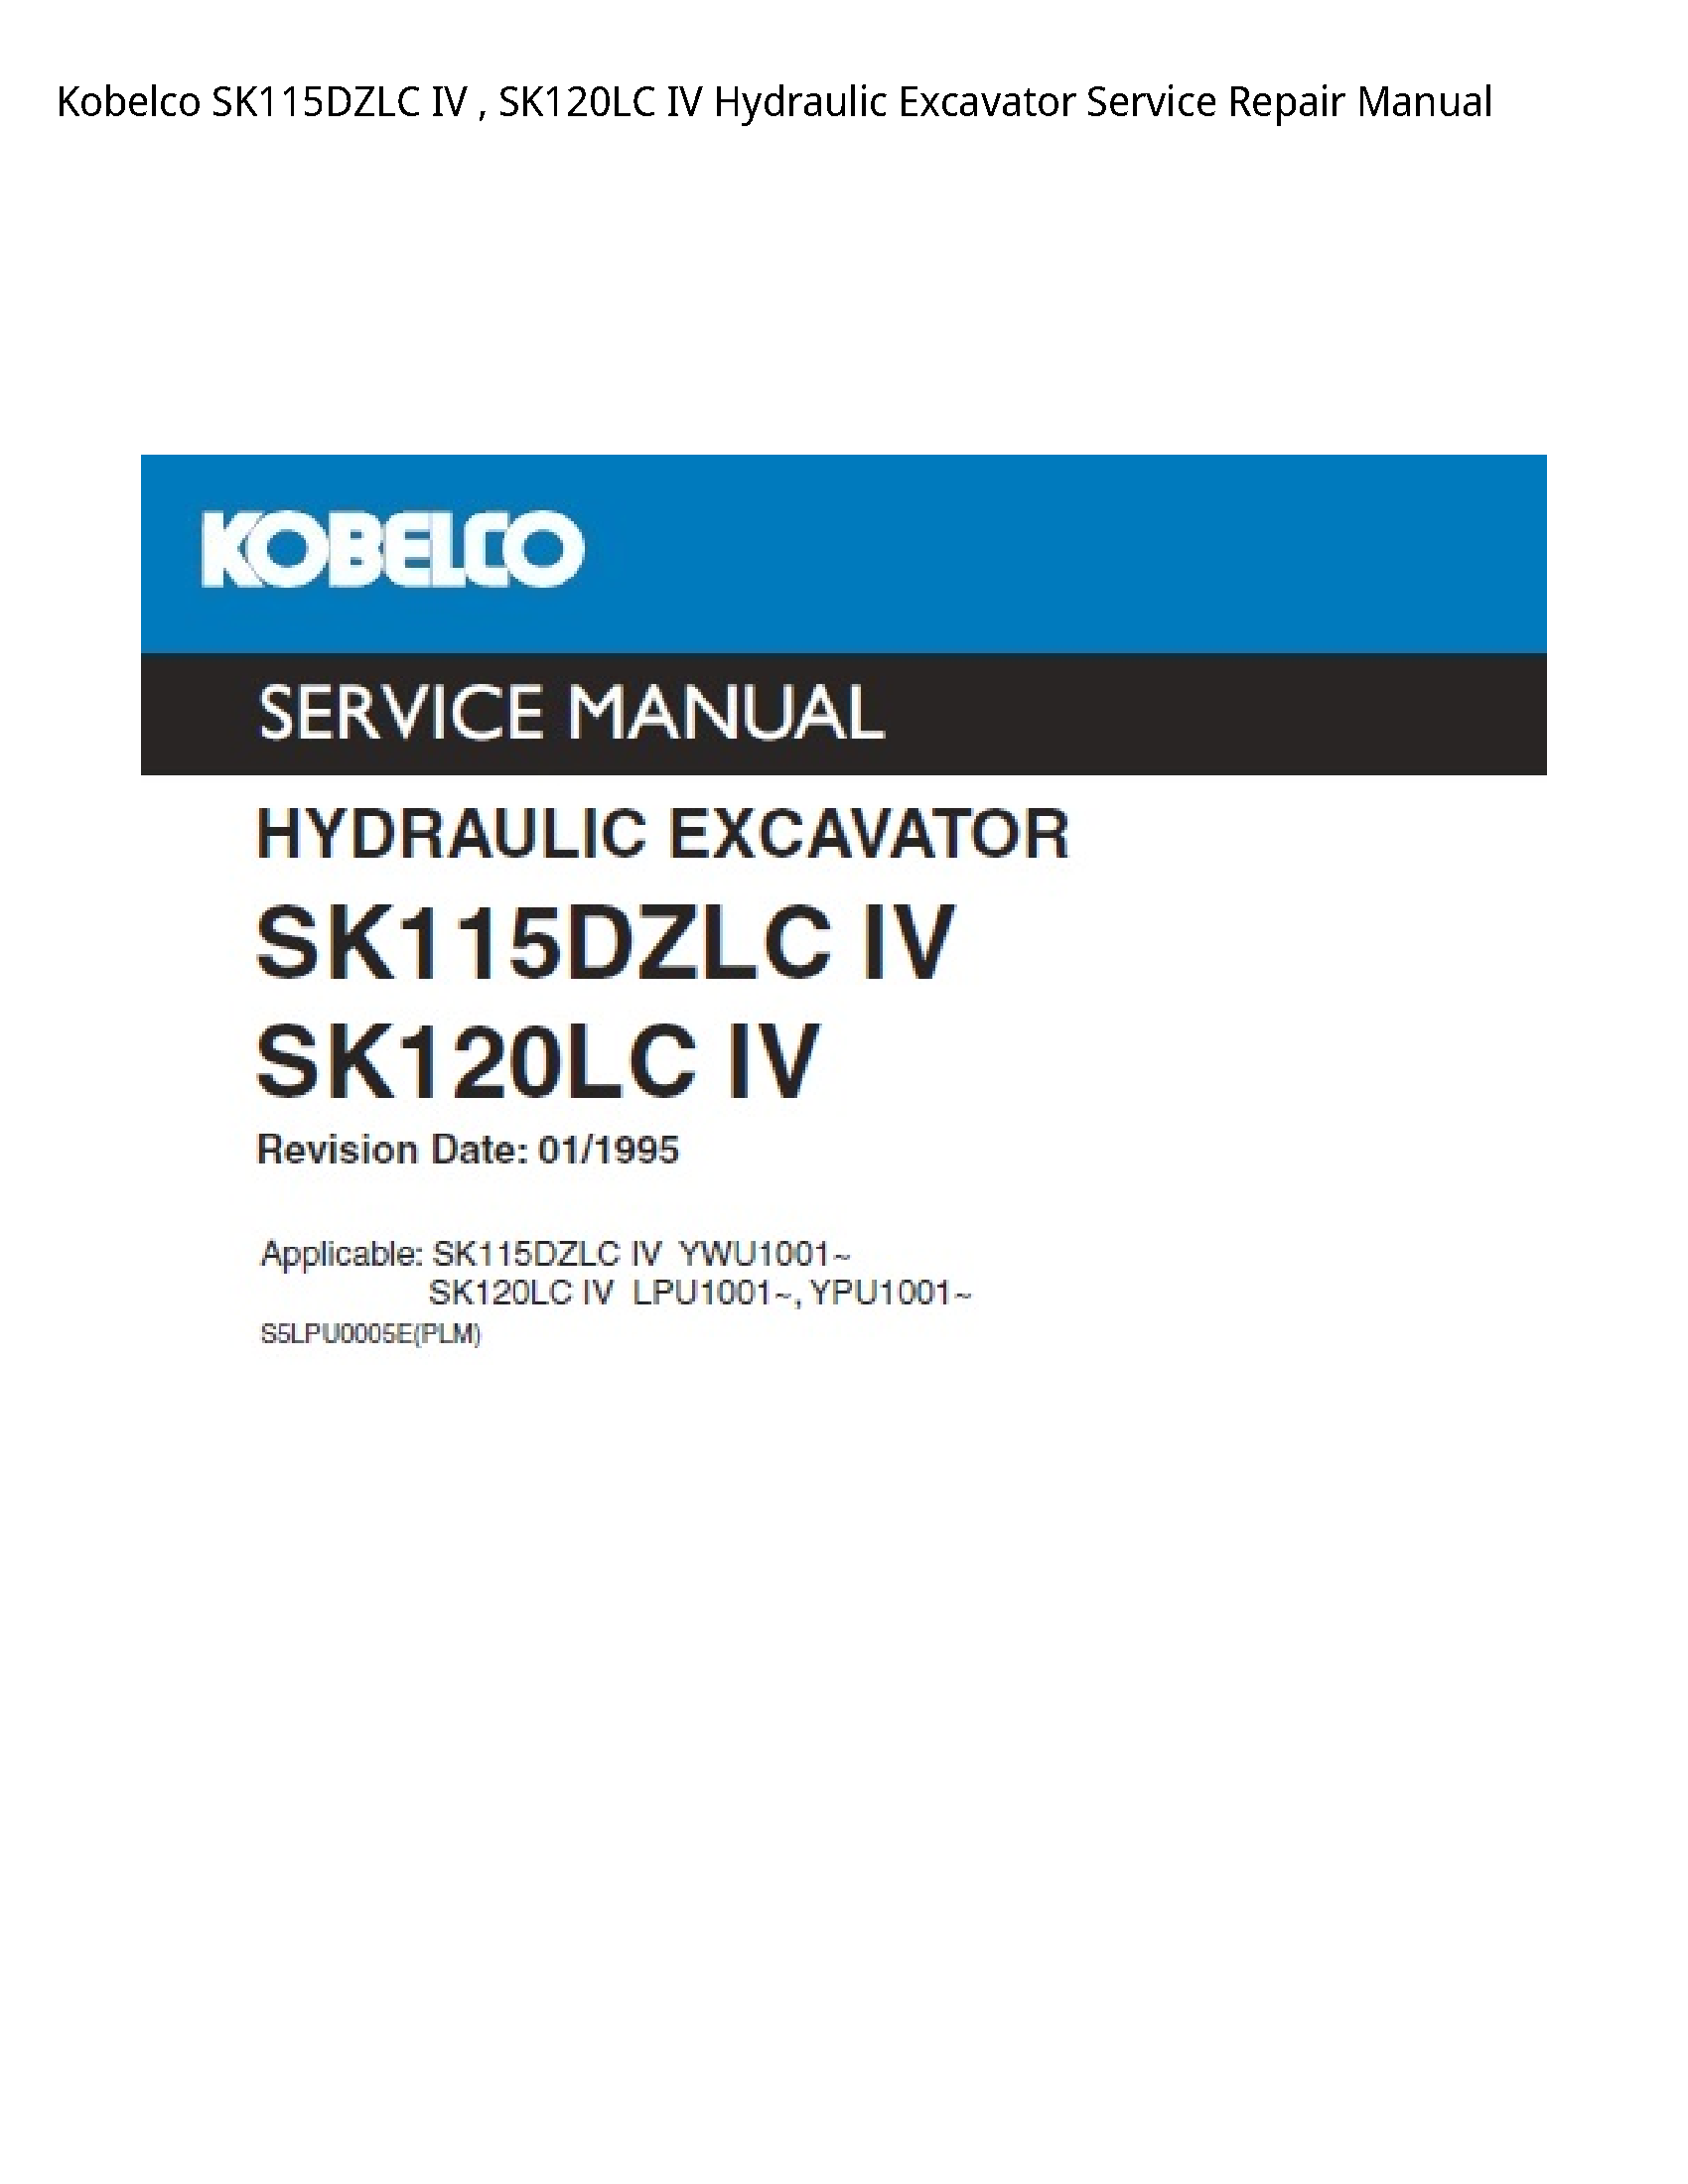 Kobelco SK115DZLC IV IV Hydraulic Excavator manual